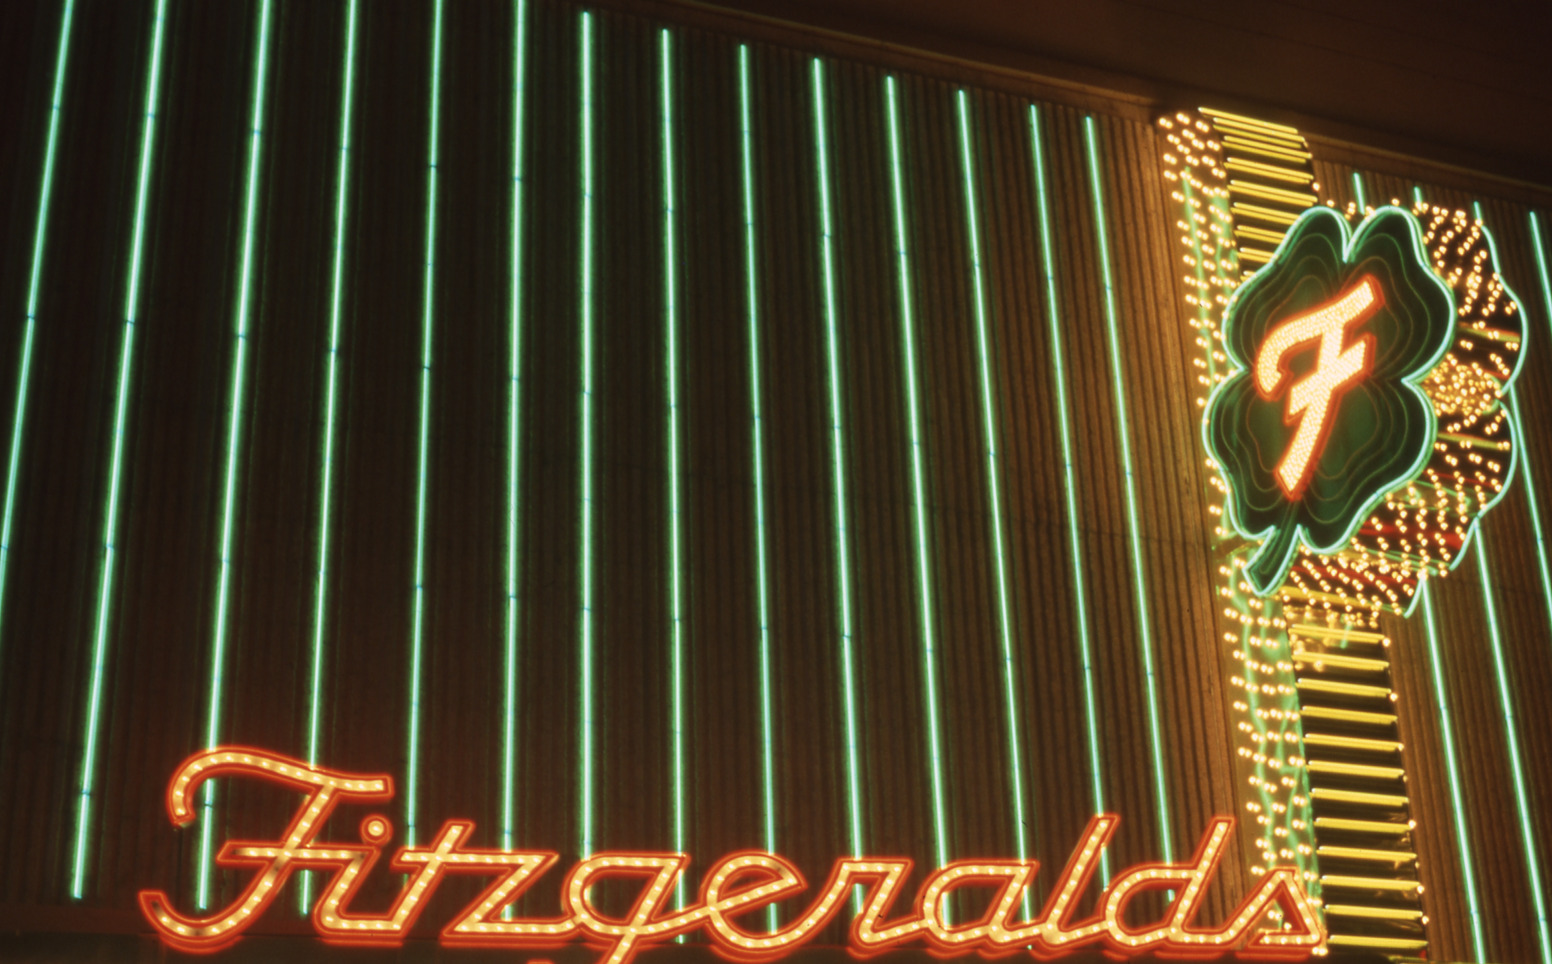 Fitzgerald's Club wall signs, Reno, Nevada: photographic print